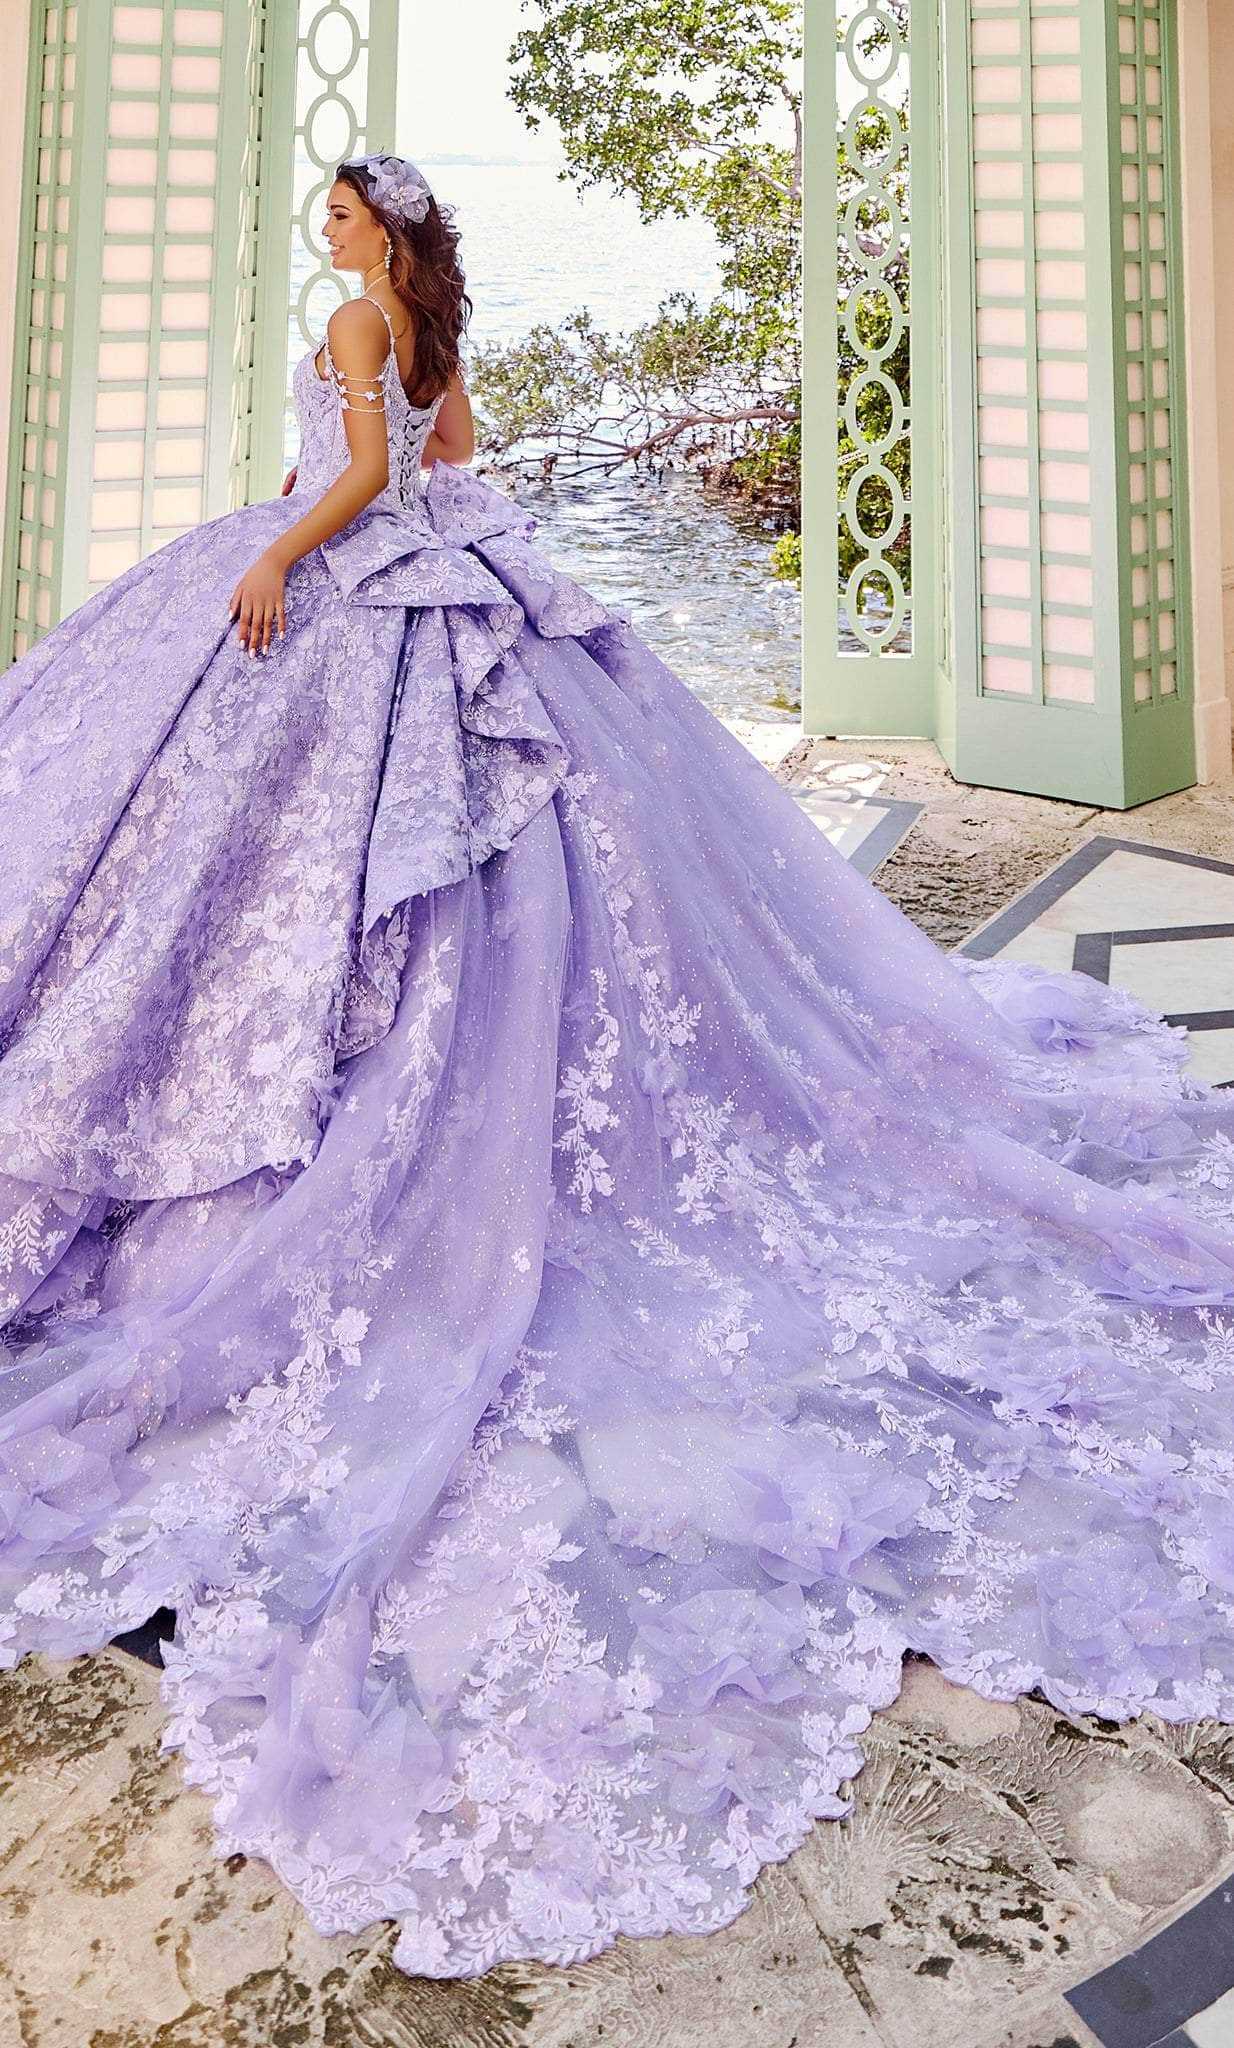 Princesa by Ariana Vara, Princesa by Ariana Vara PR30139 - Bolero-Attached Floral Ball Gown